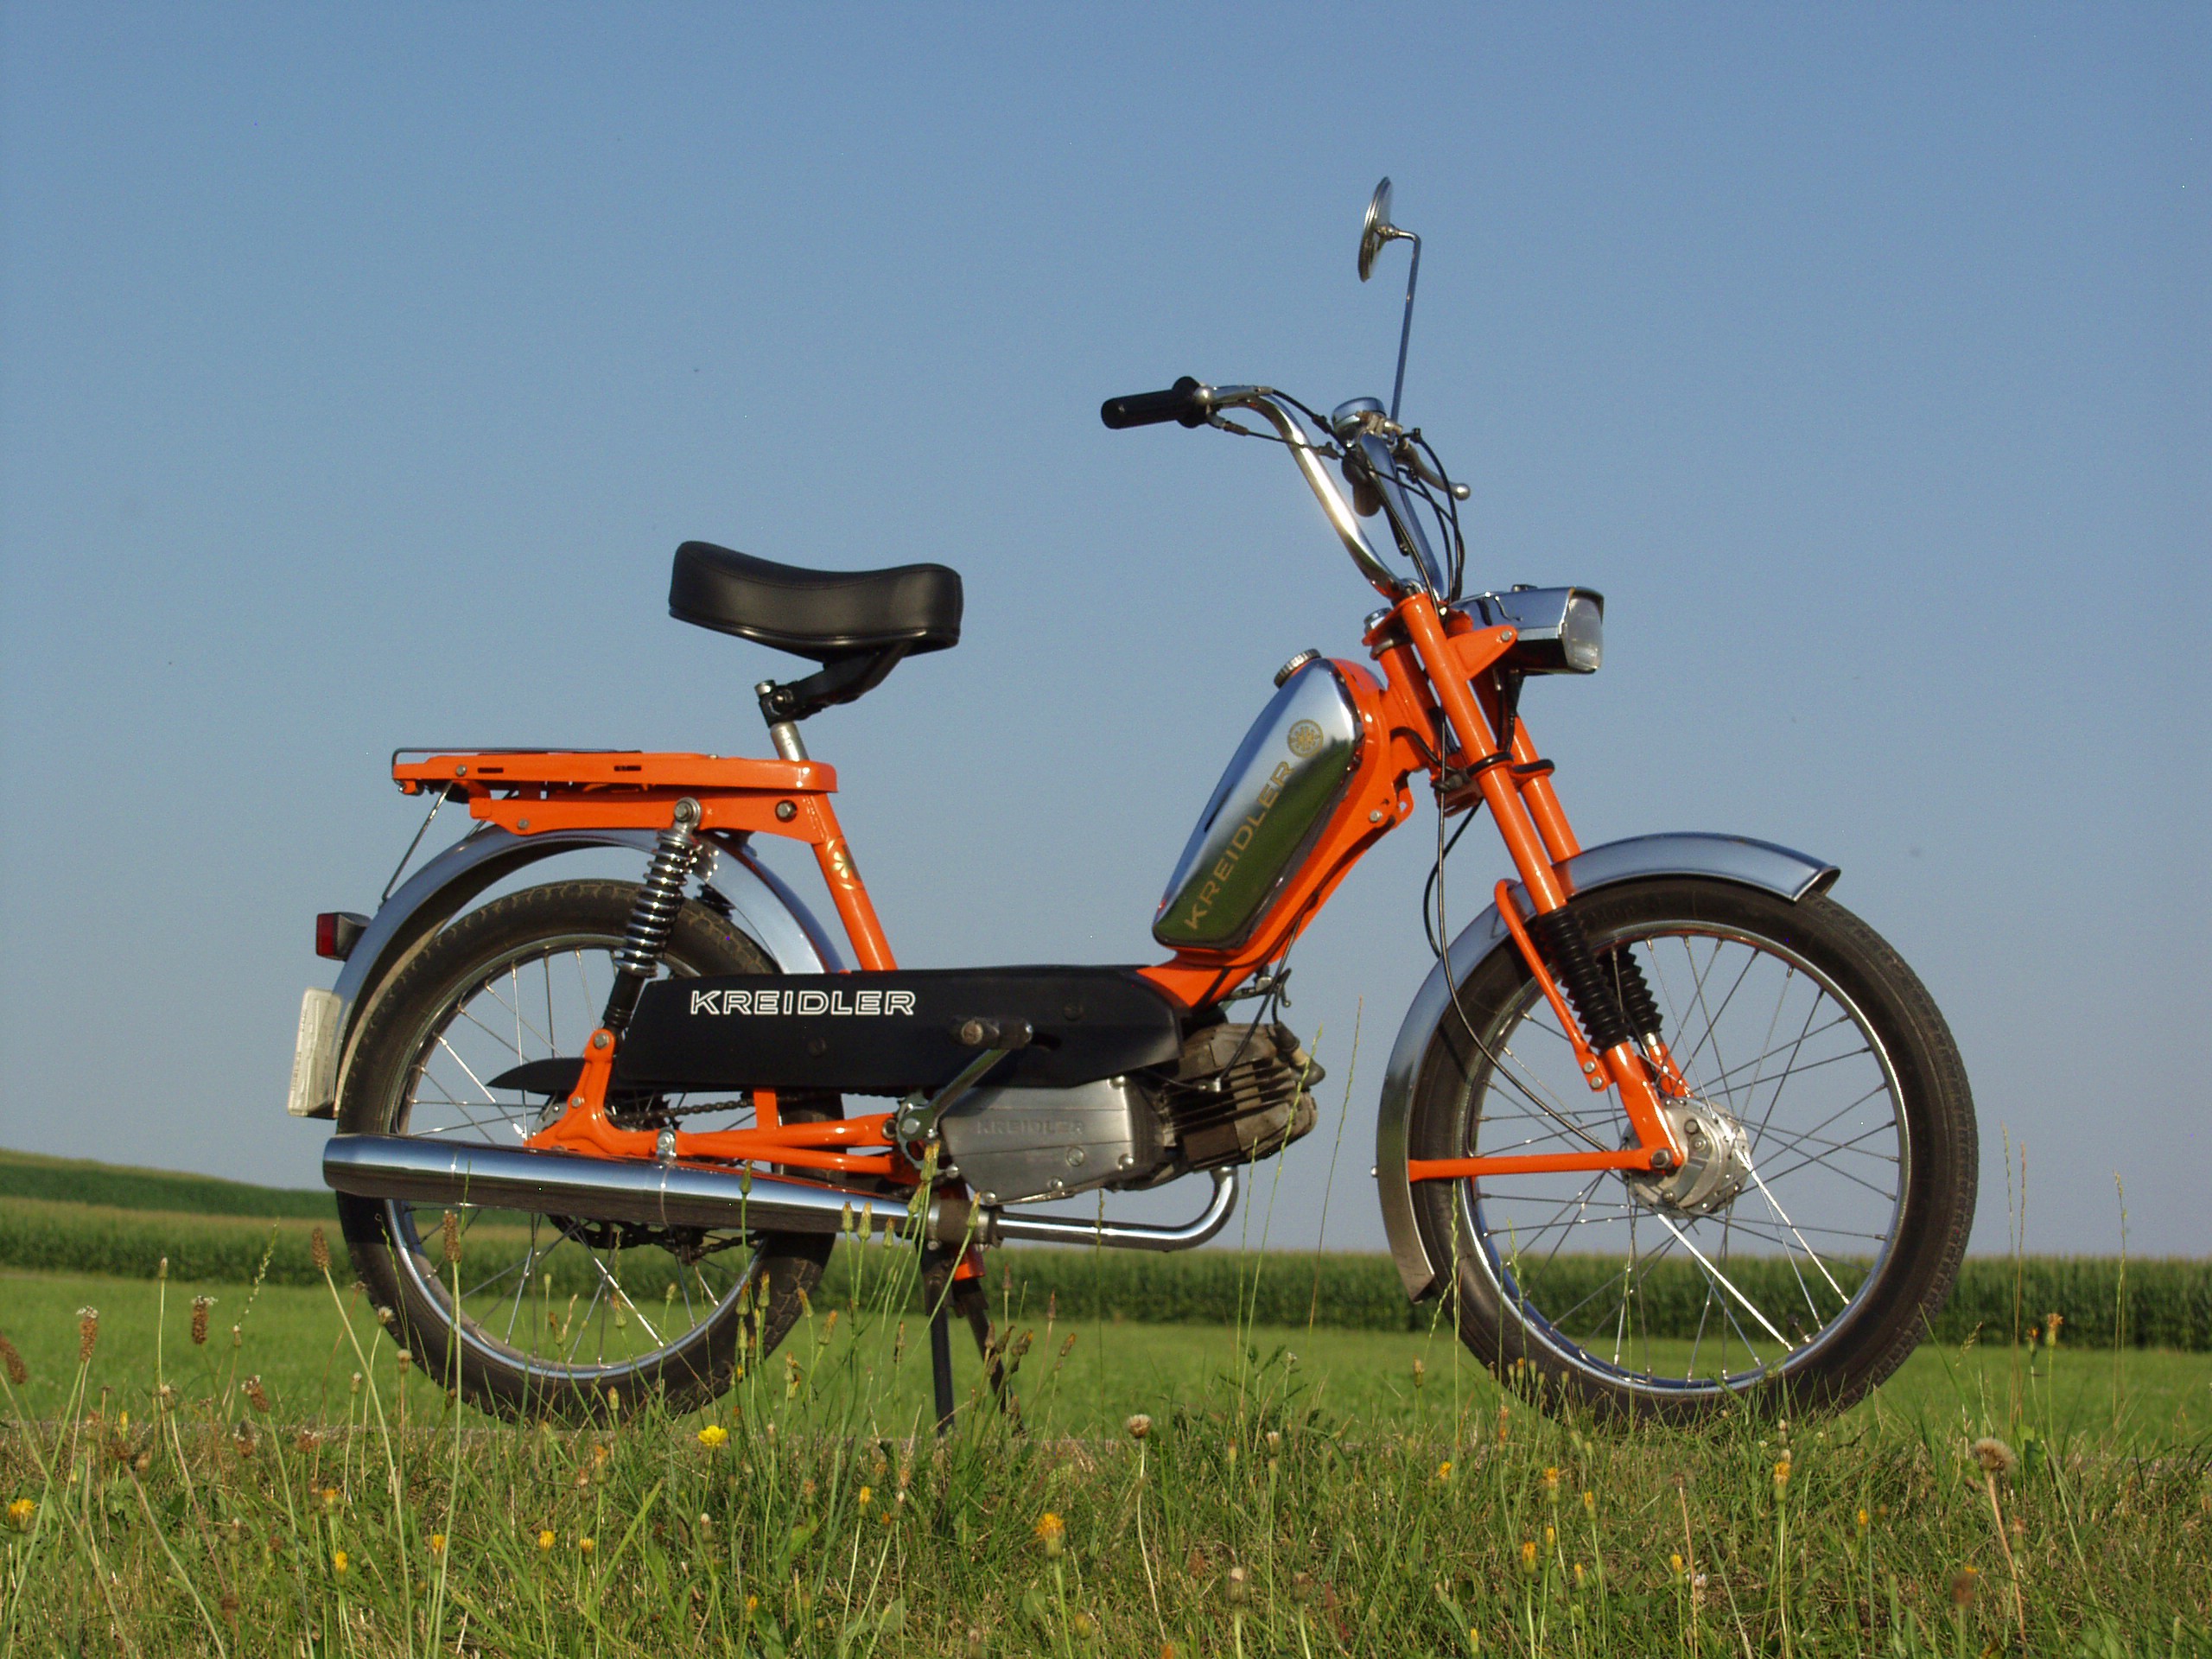 https://www.old-vintage-garage.de/fileadmin/Kreidler_MF2/KreidlerMF2-9-kreidler-flory-mf2-baujahr-1978-old-vintage-garage-oldtimer-mofa-moped-fahrrad-mit-hilfsmotor.jpg